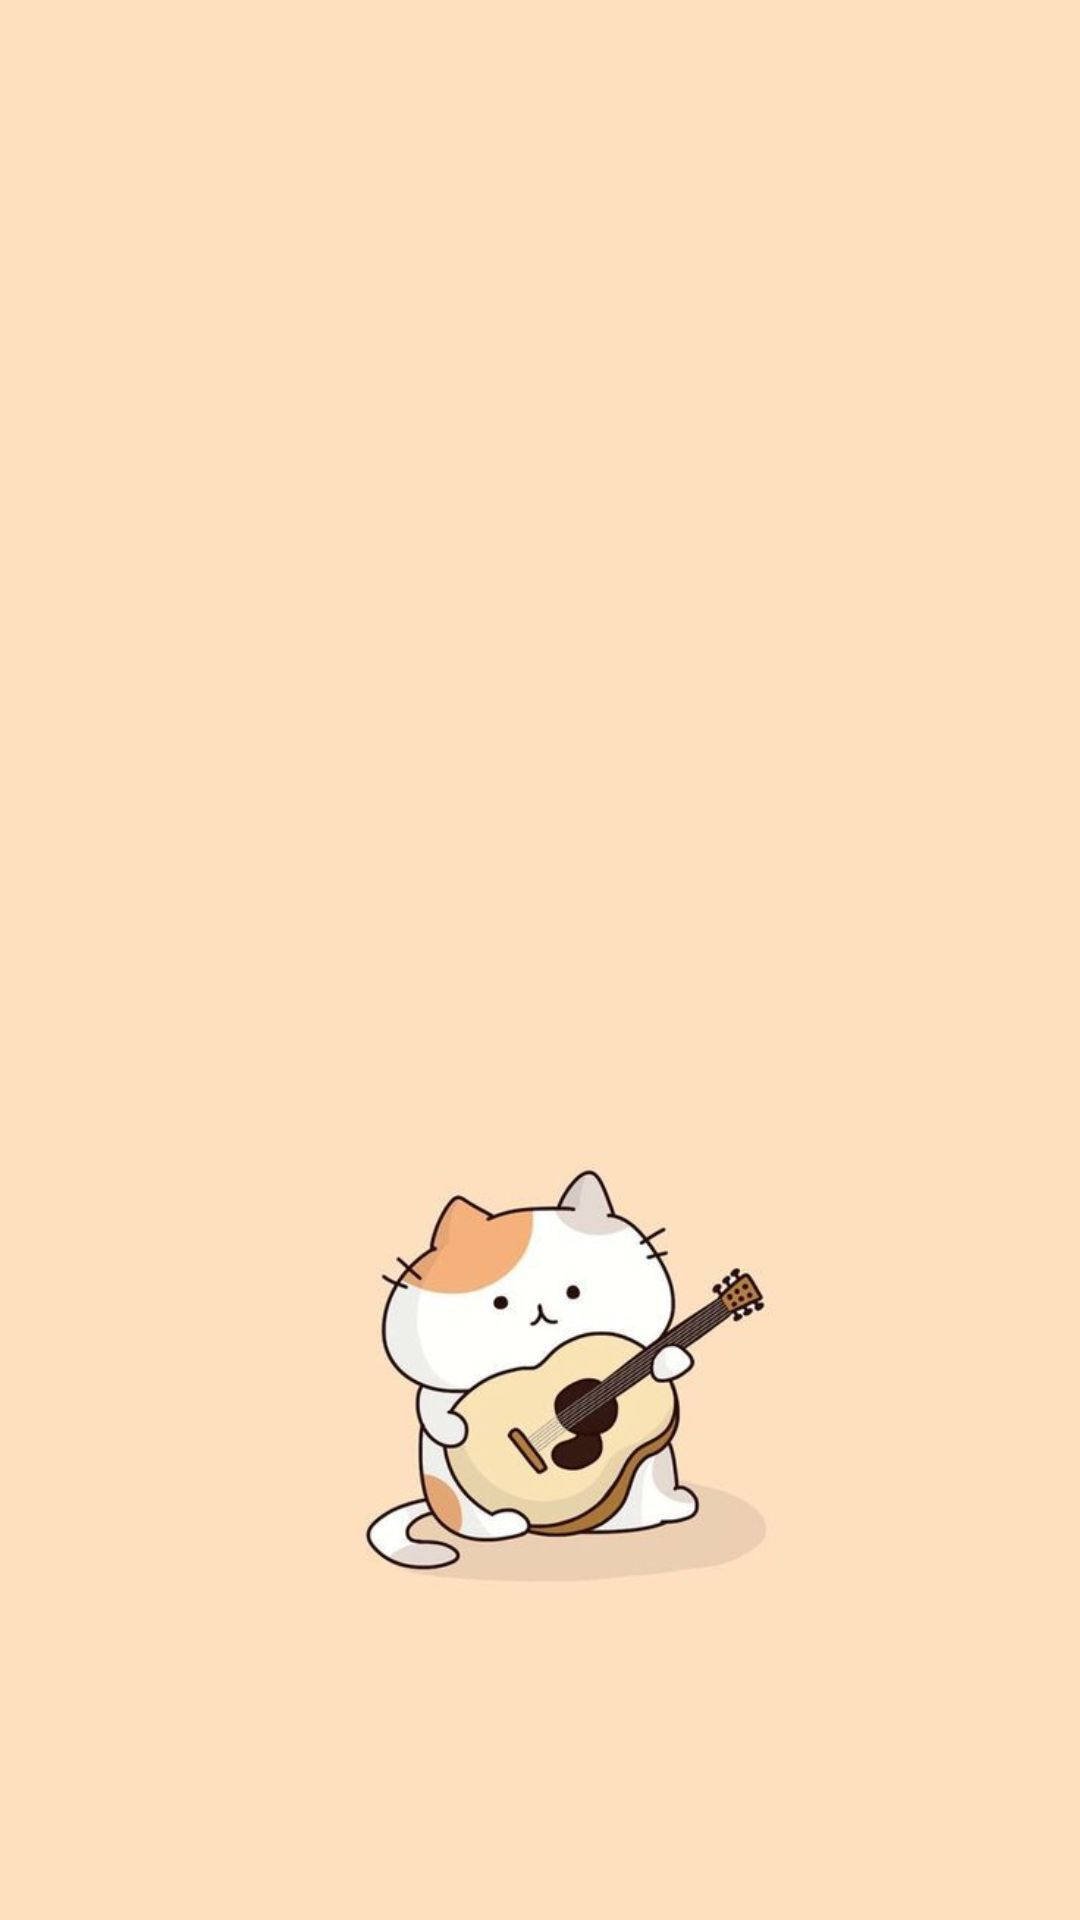 Download Cute Mobile Cat With Guitar Wallpaper | Wallpapers.com